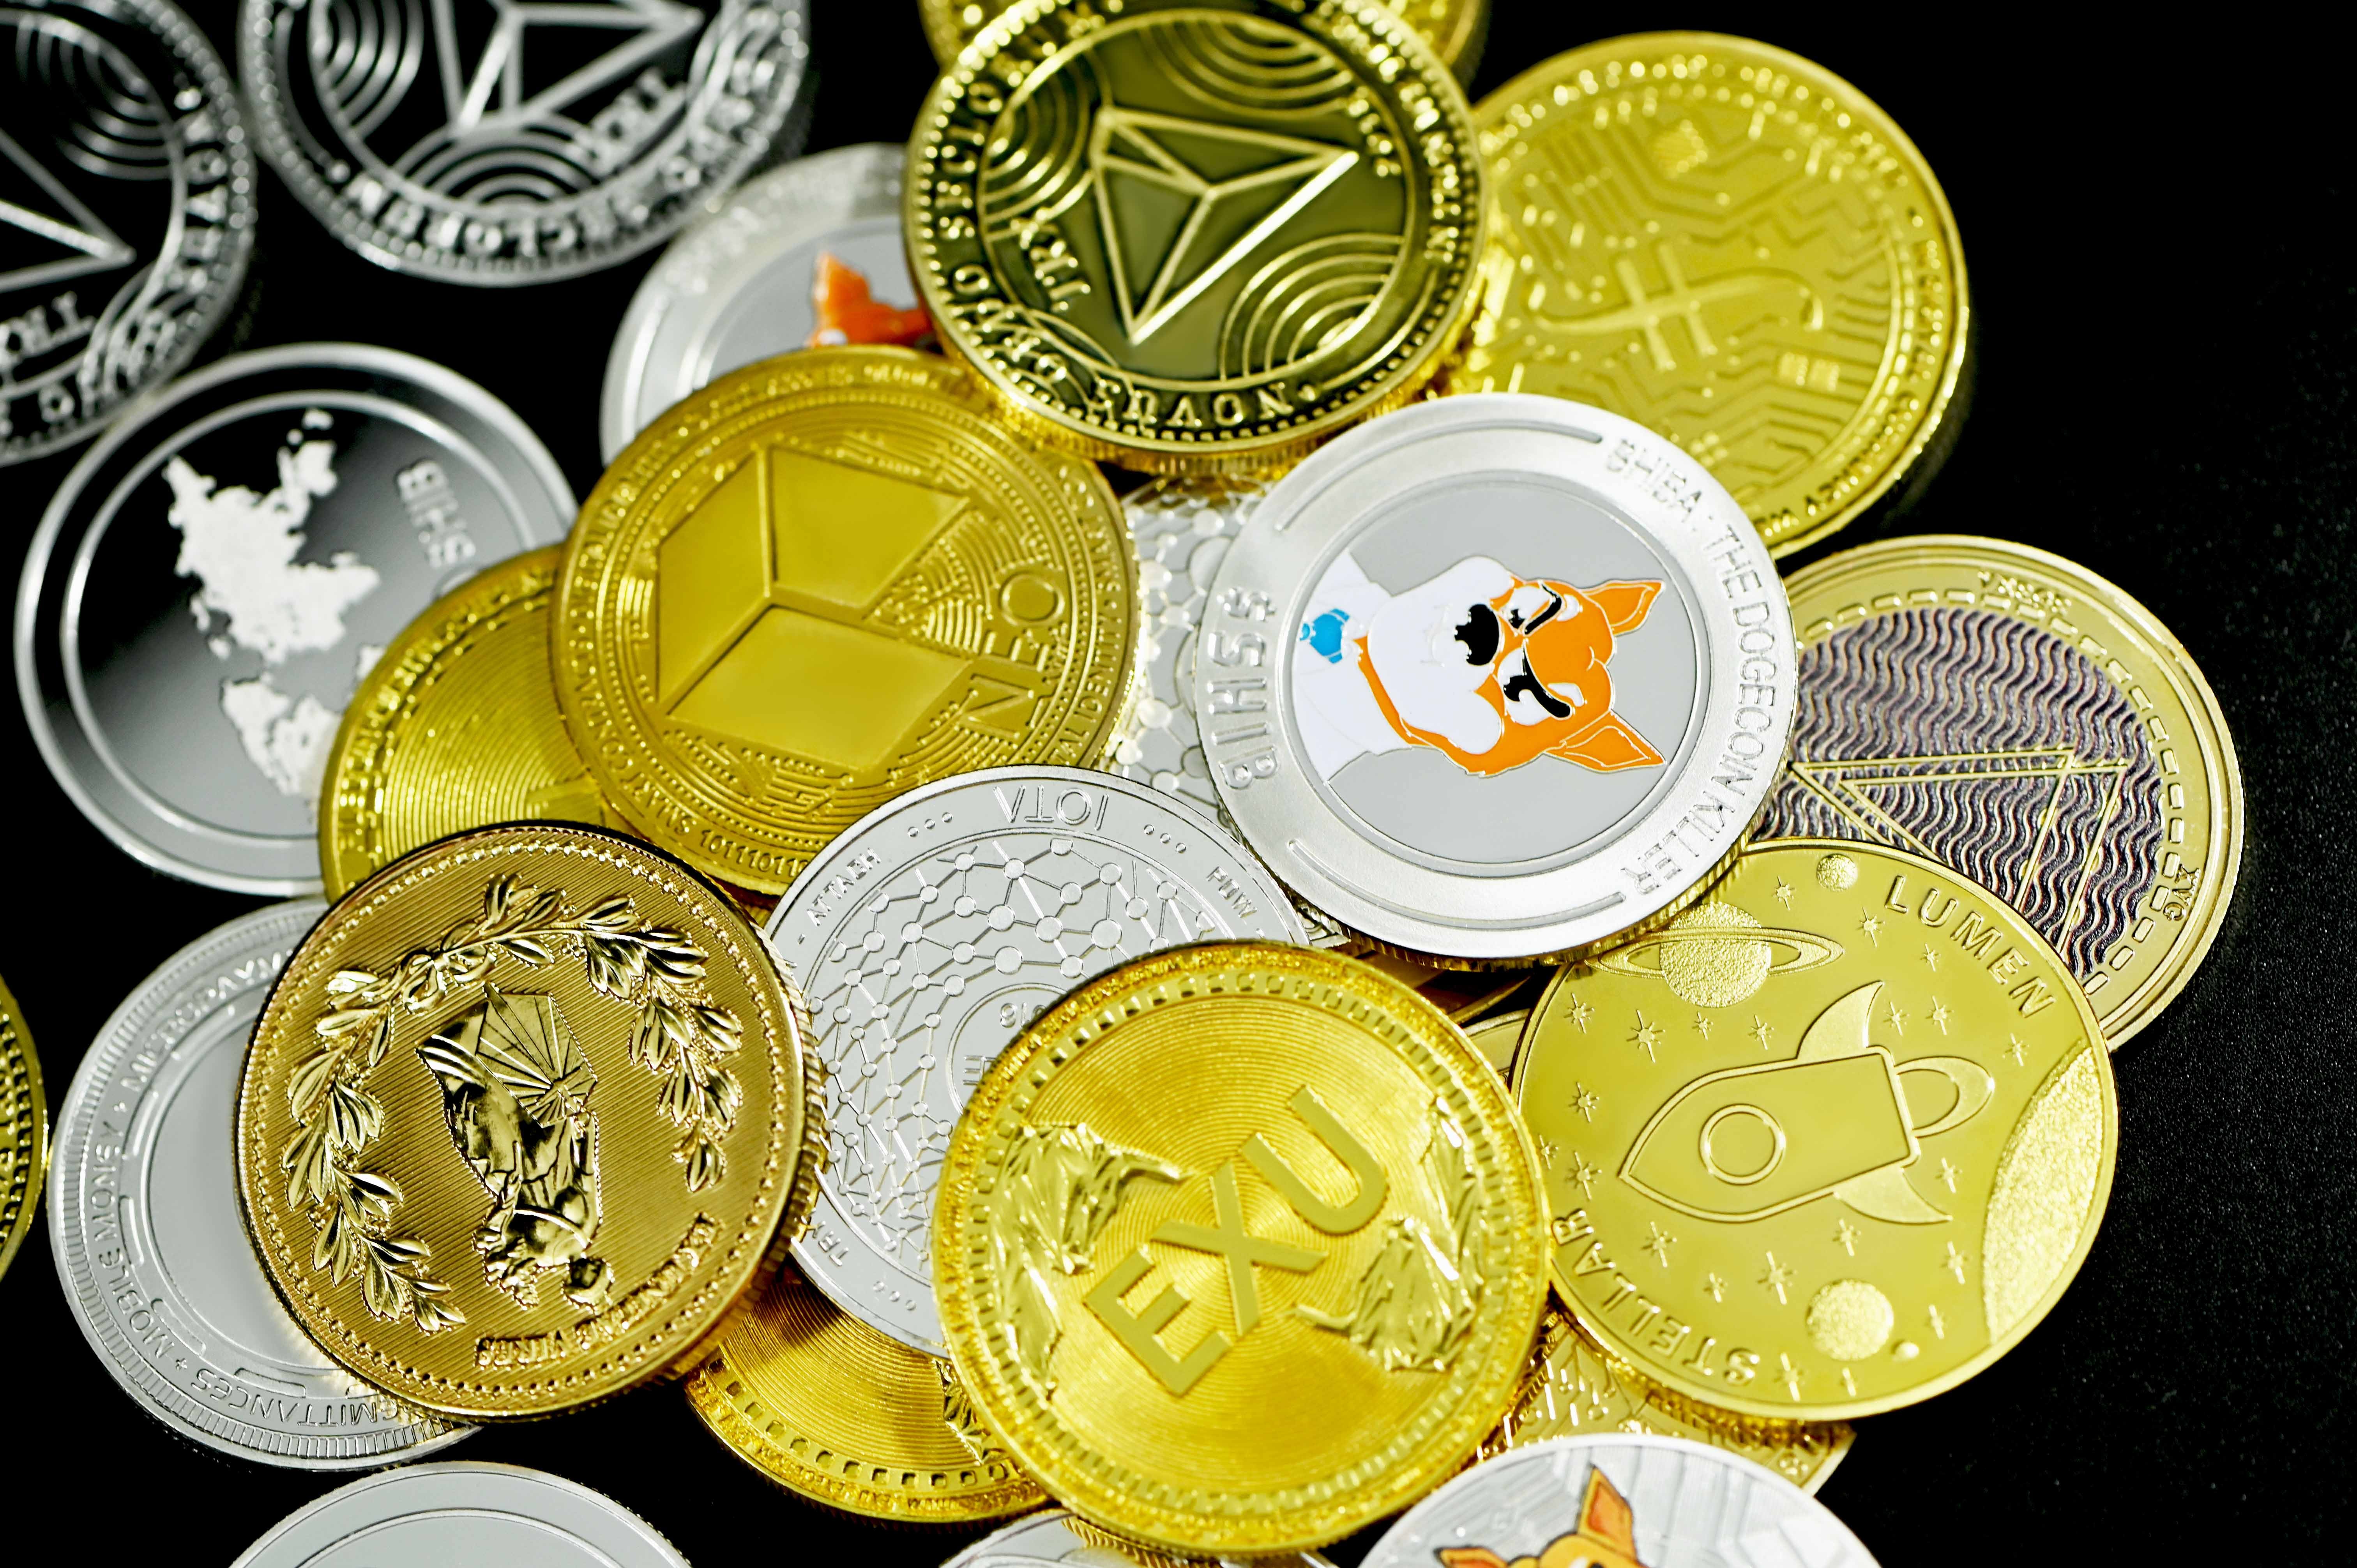 Stock crypto coins image by Executium on Unsplash